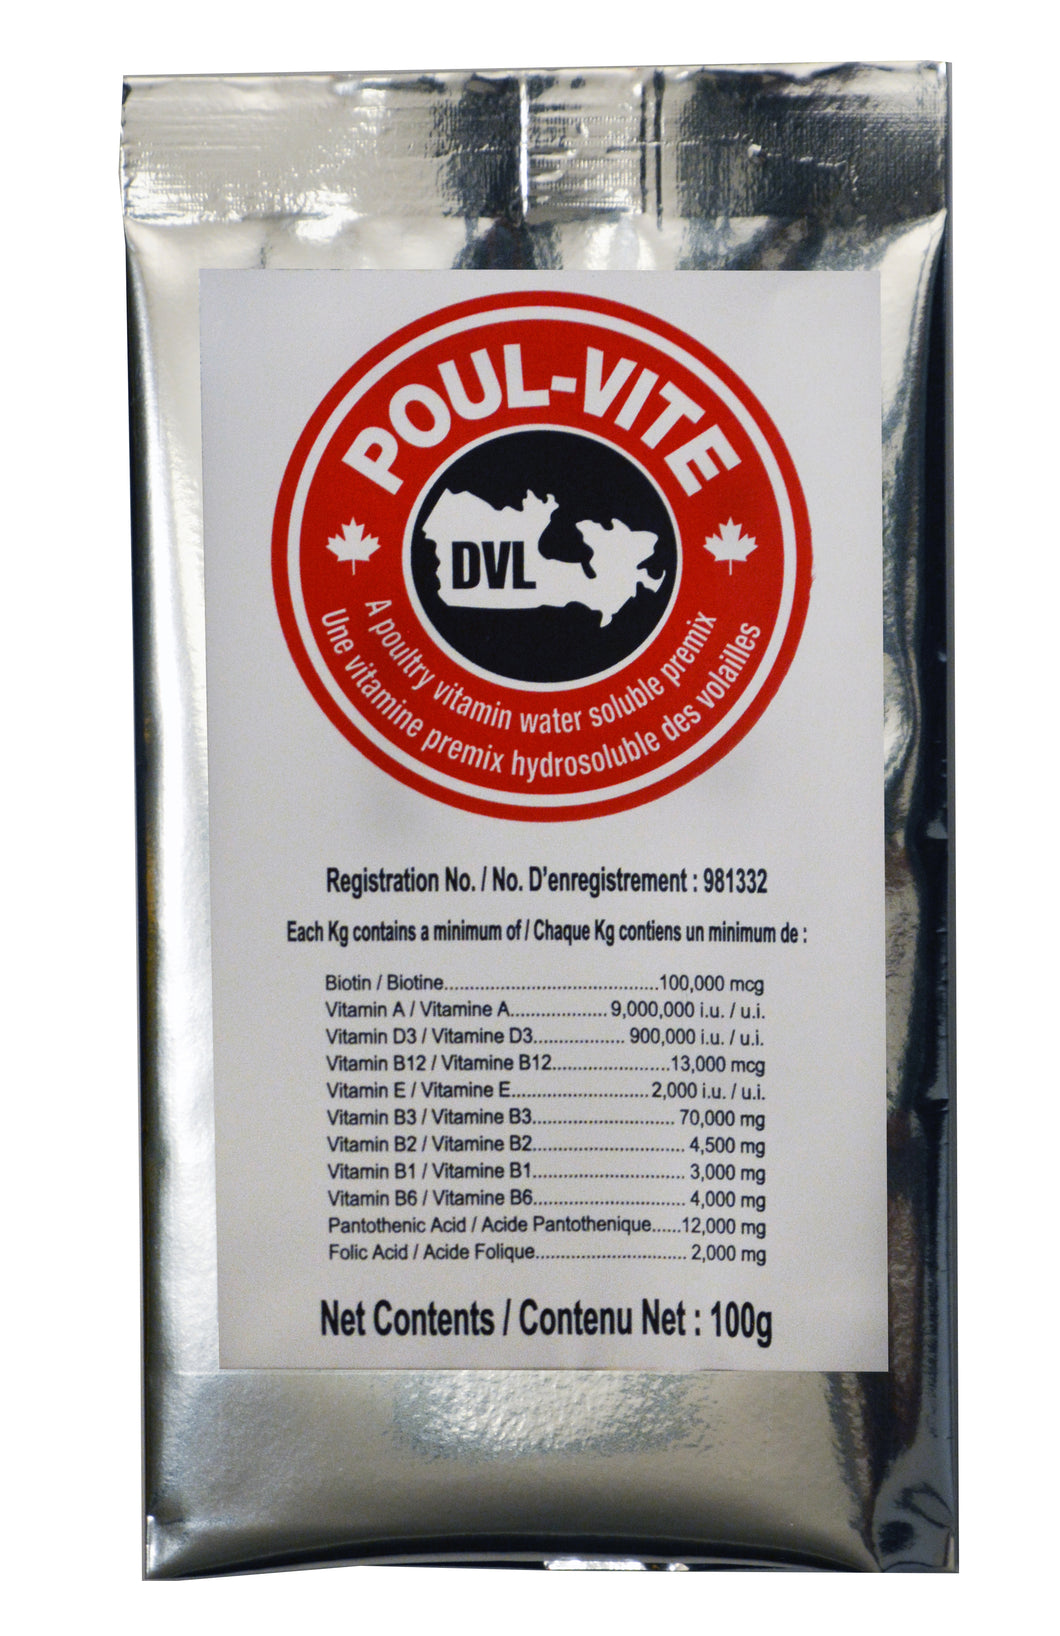 POUL-VITE 100 G A poultry vitamin water soluble premix